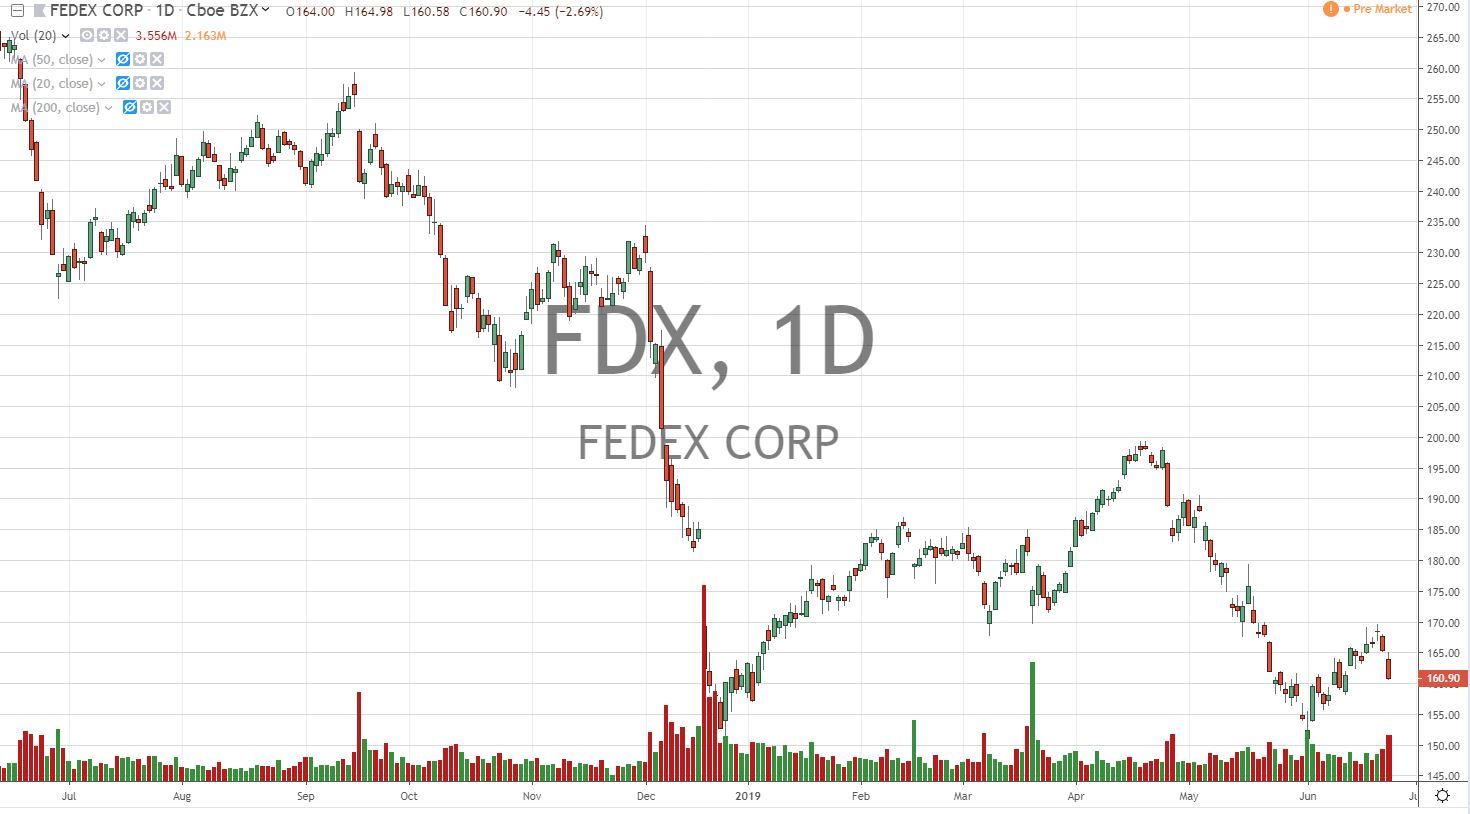 Fedex Corp FDX Stock Chart 6.25.19 Before Earnings